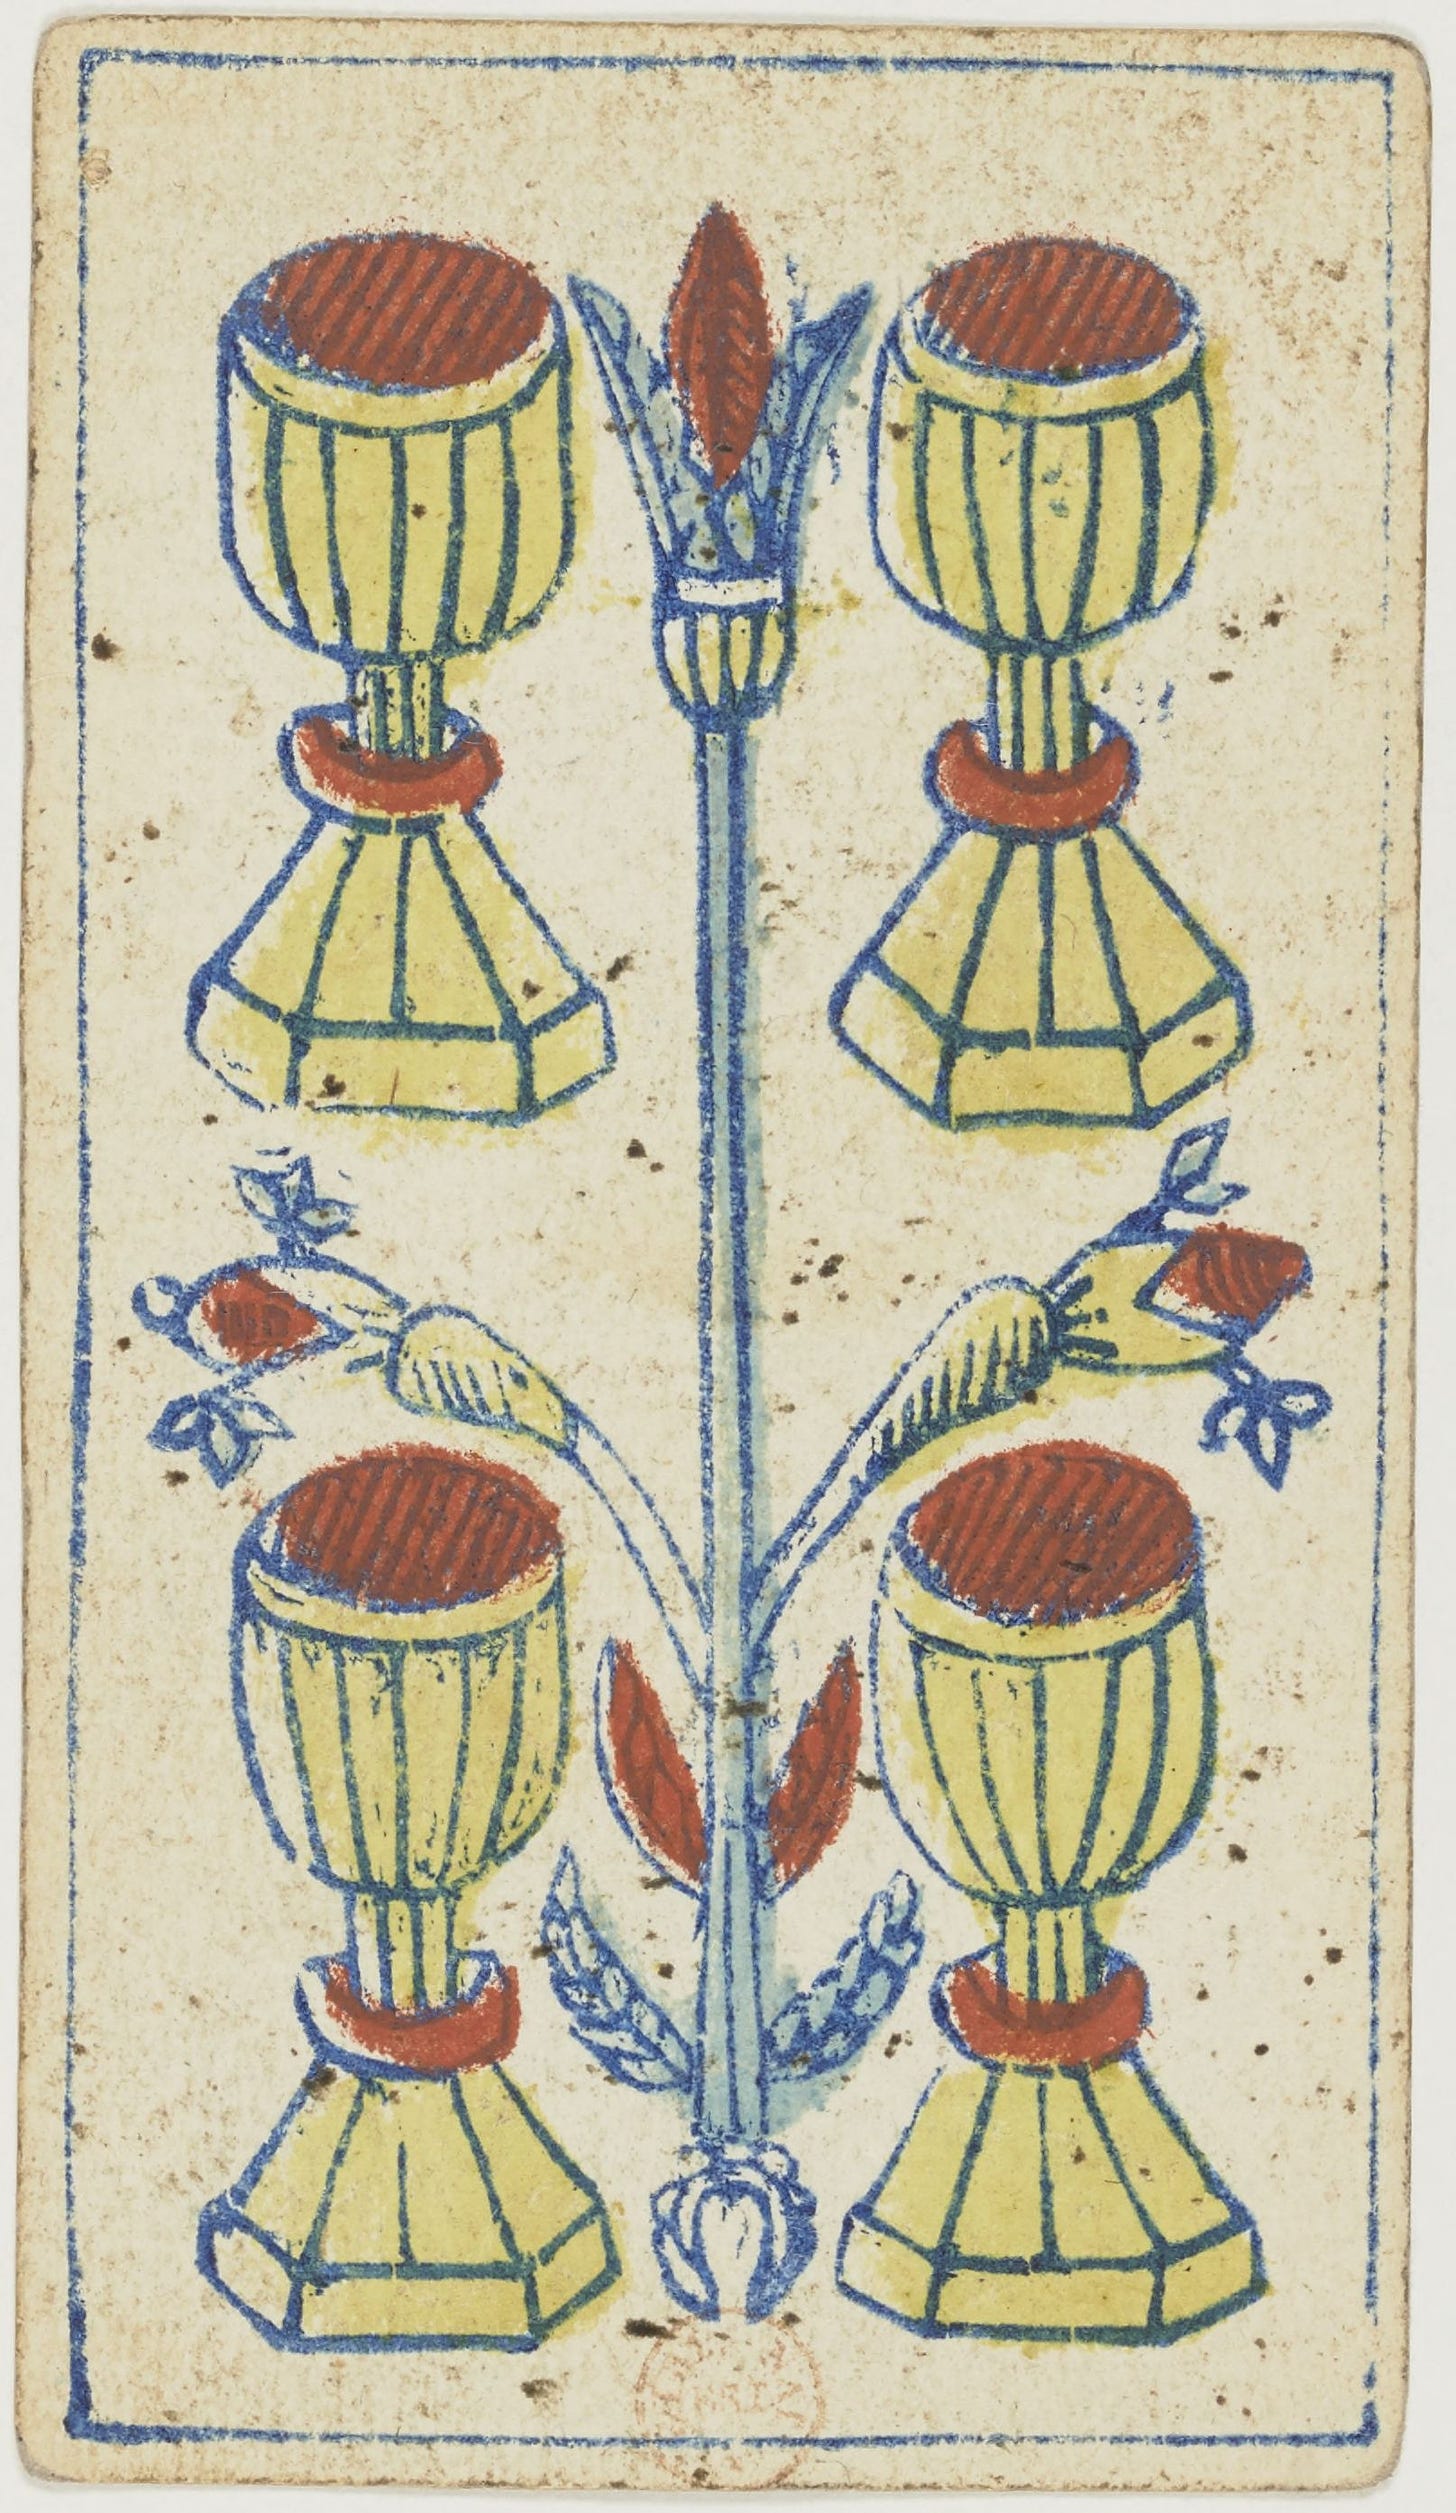 File:Piedmontese tarot deck - Solesio - 1865 - 4 of Cups.jpg - Wikimedia  Commons